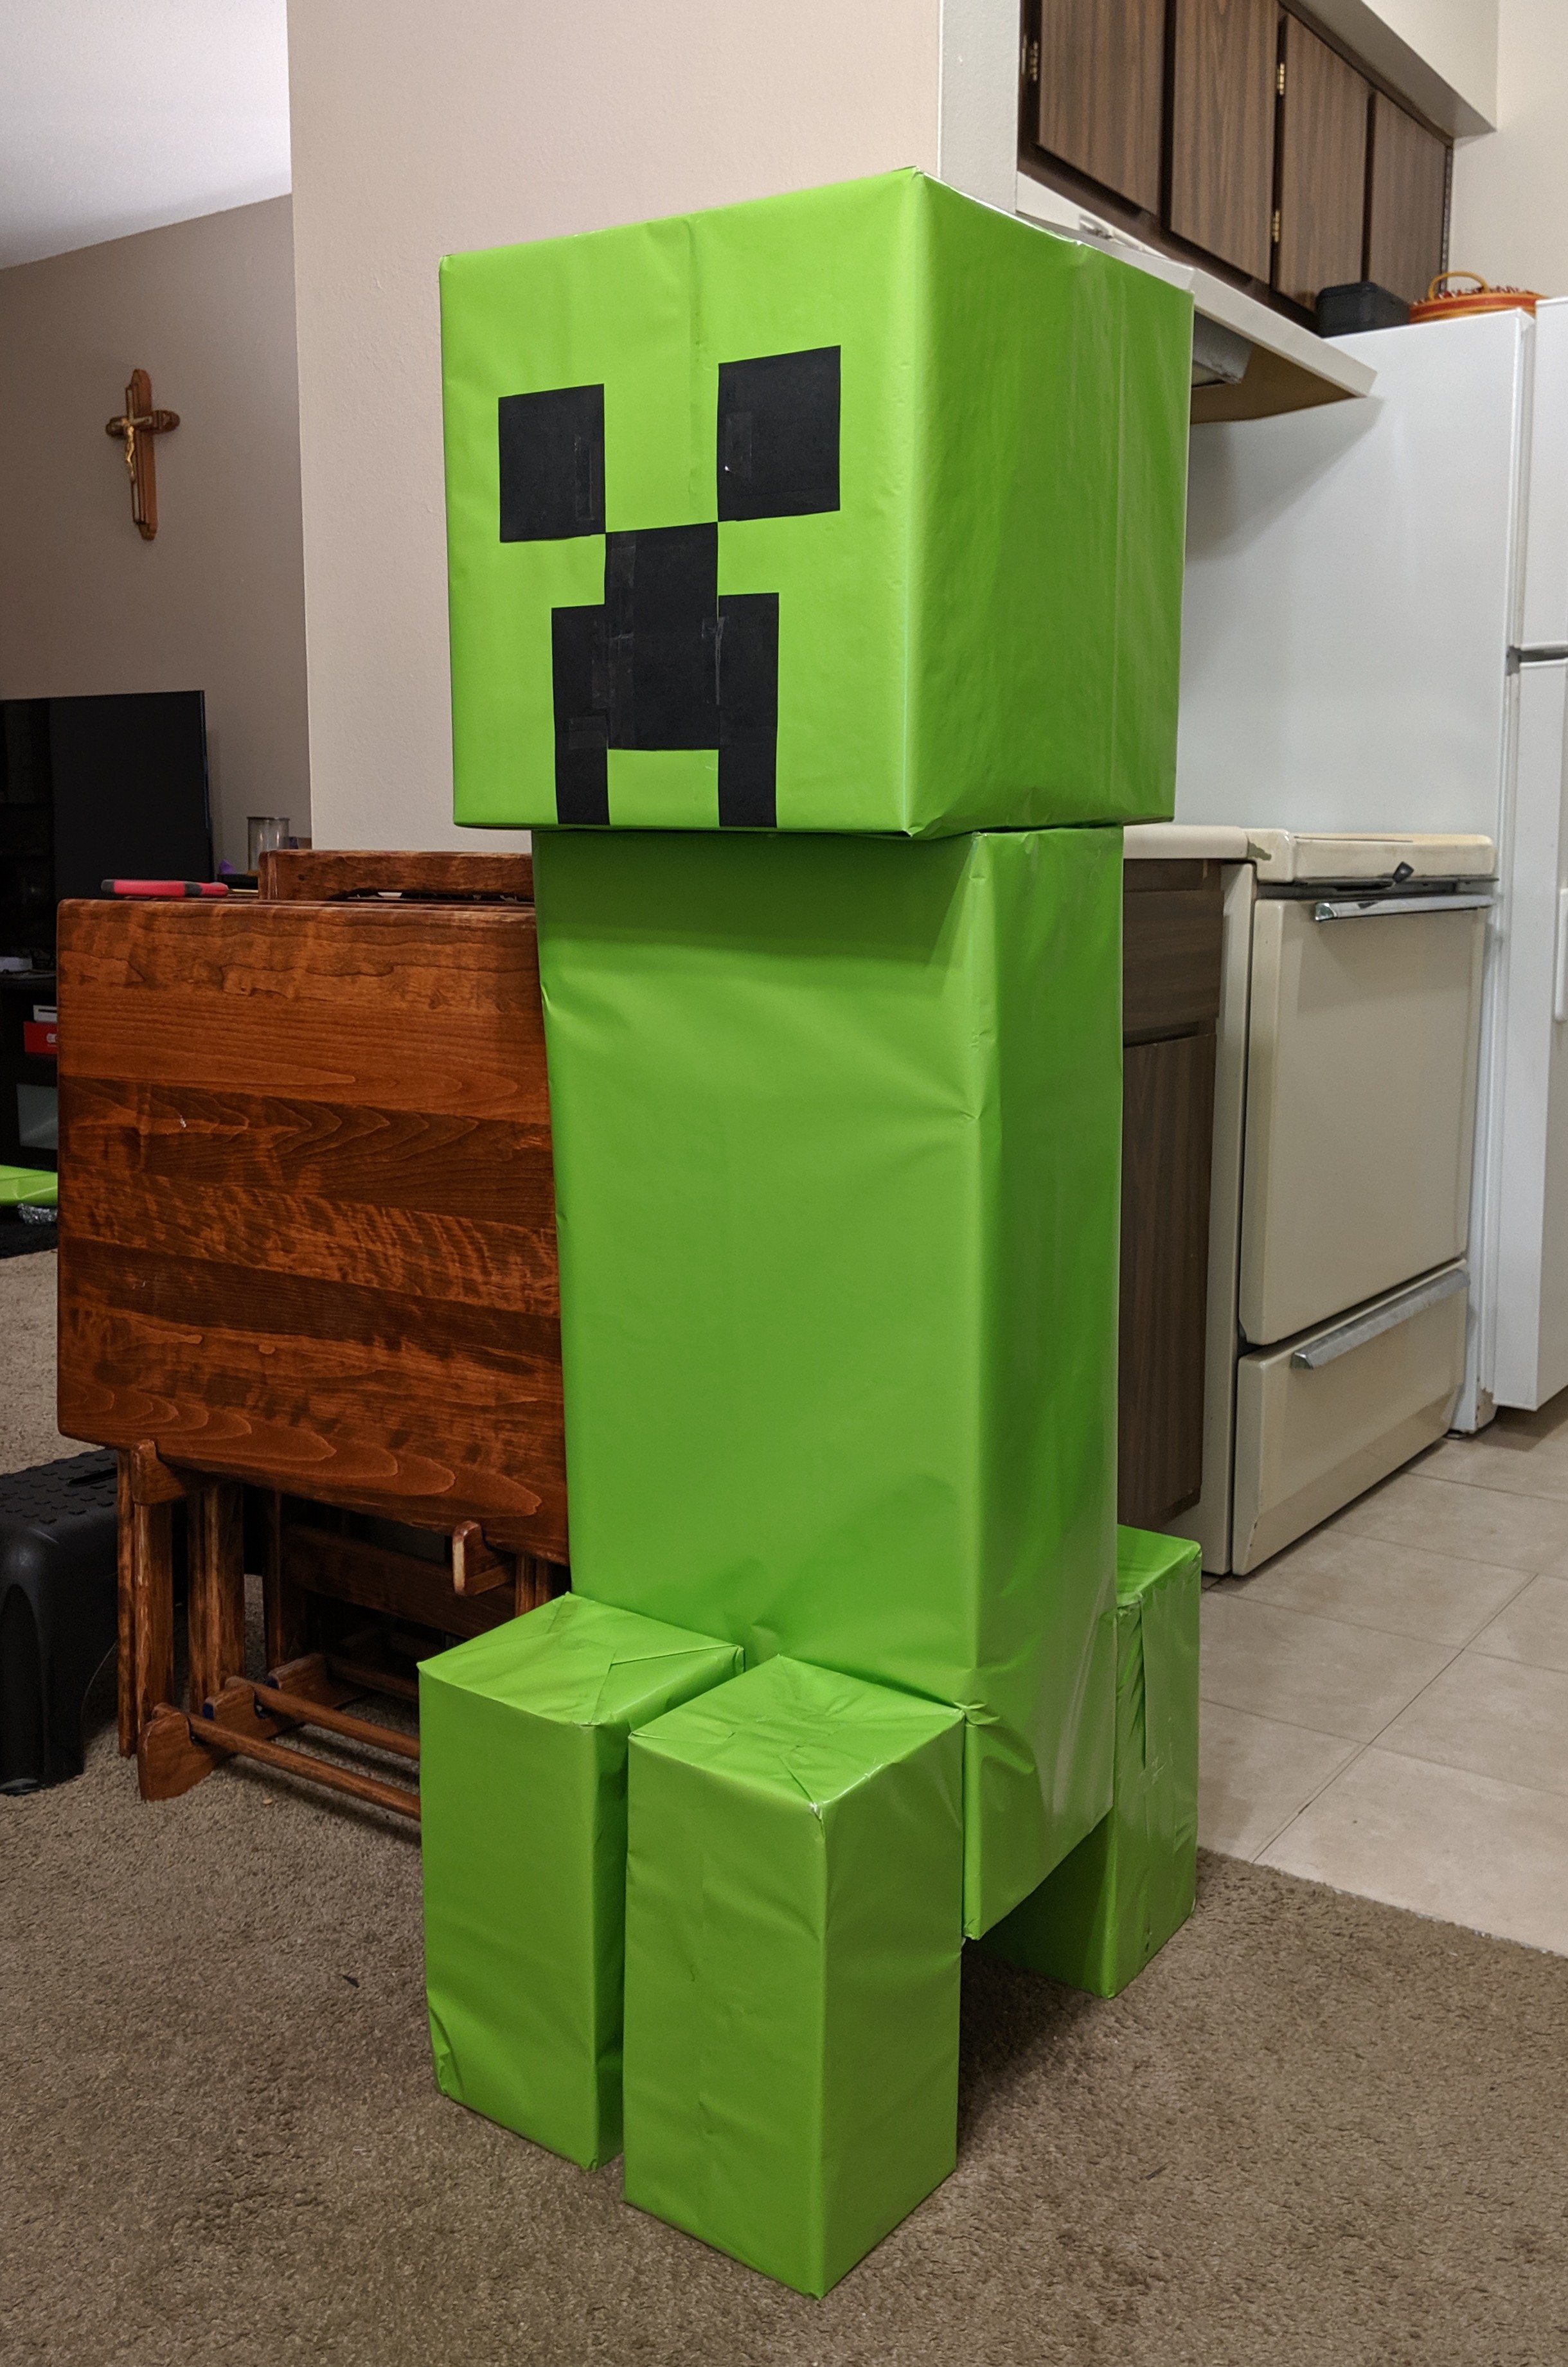 Minecraft Creeper Cardboard Cutout Standee